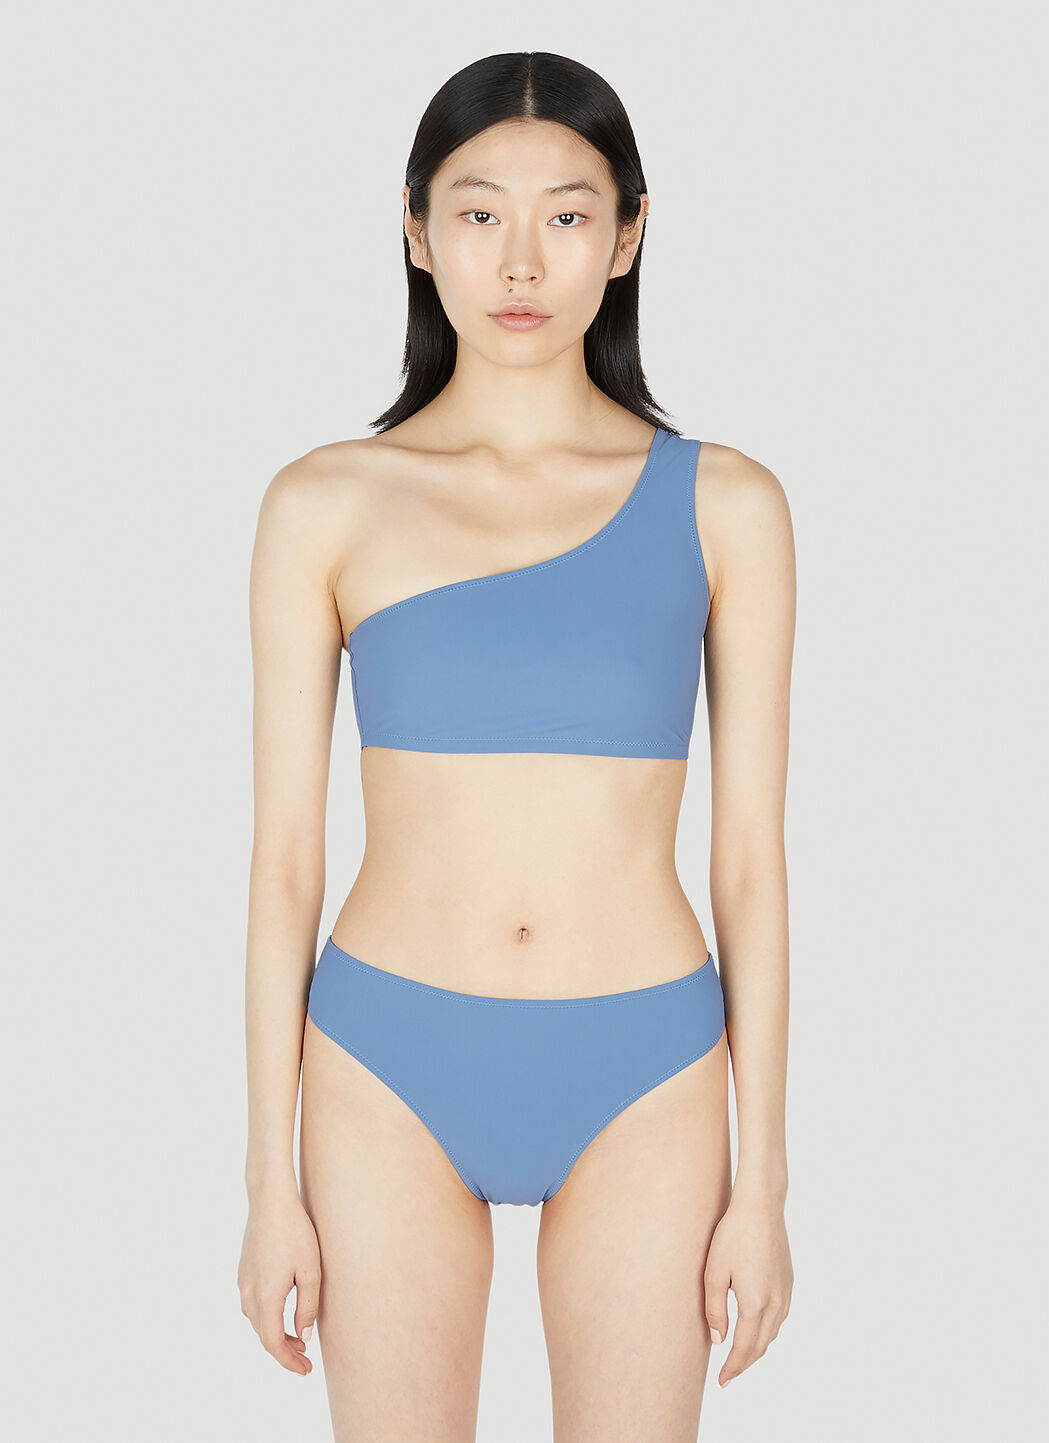 Acne Studios Trentadue Bikini Set Blue acn0256032